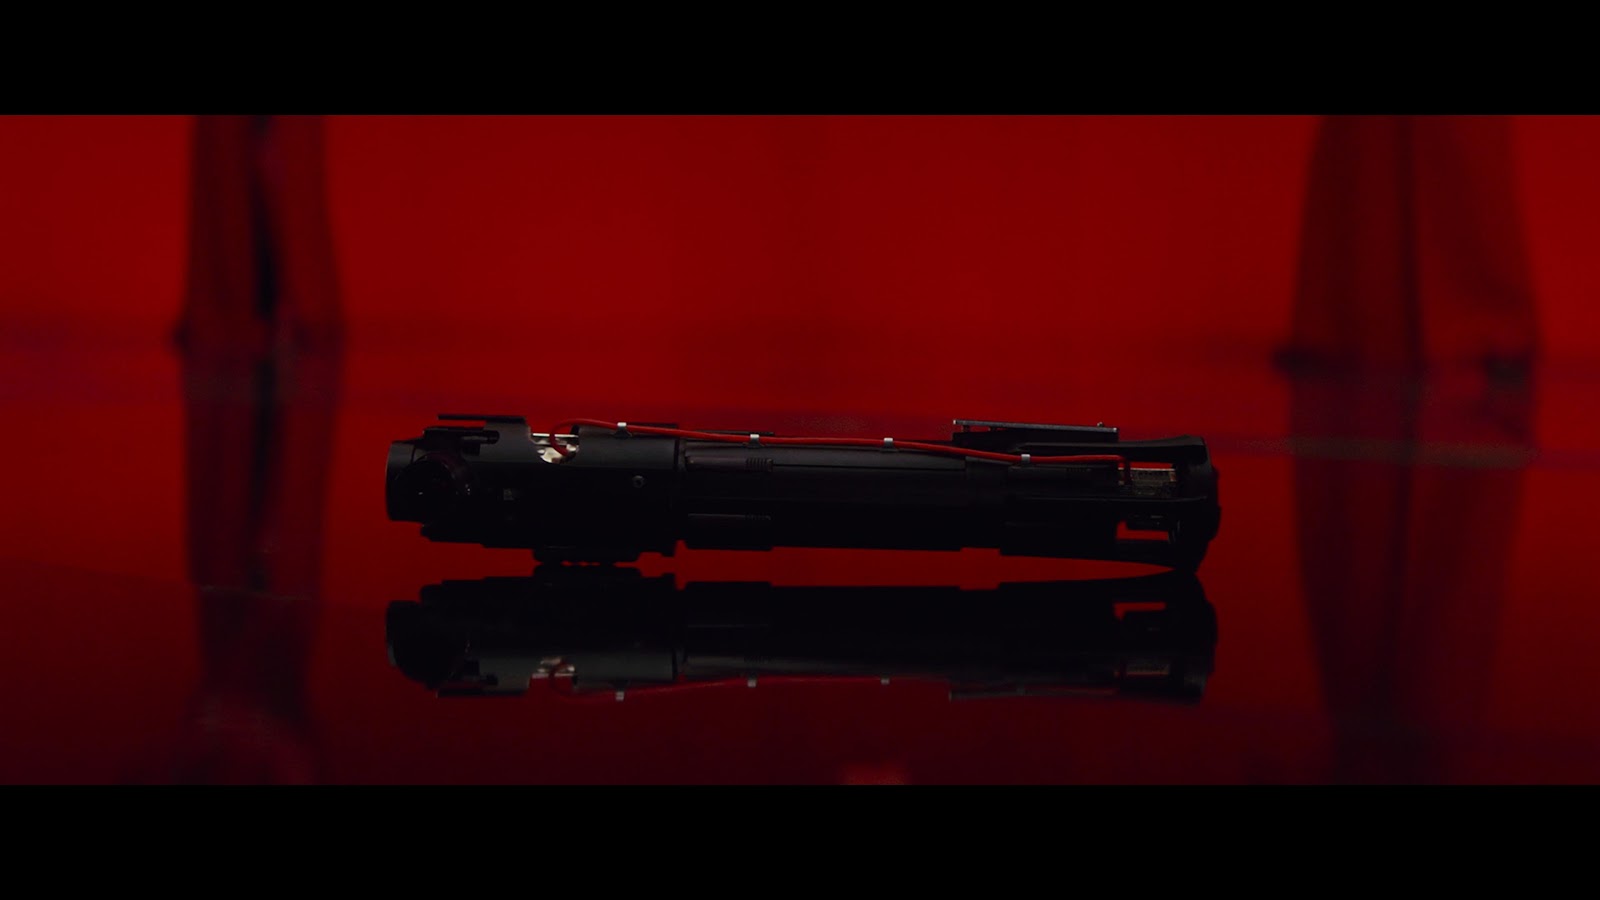 Kylo Ren's lightsaber in Star Wars: The Last Jedi